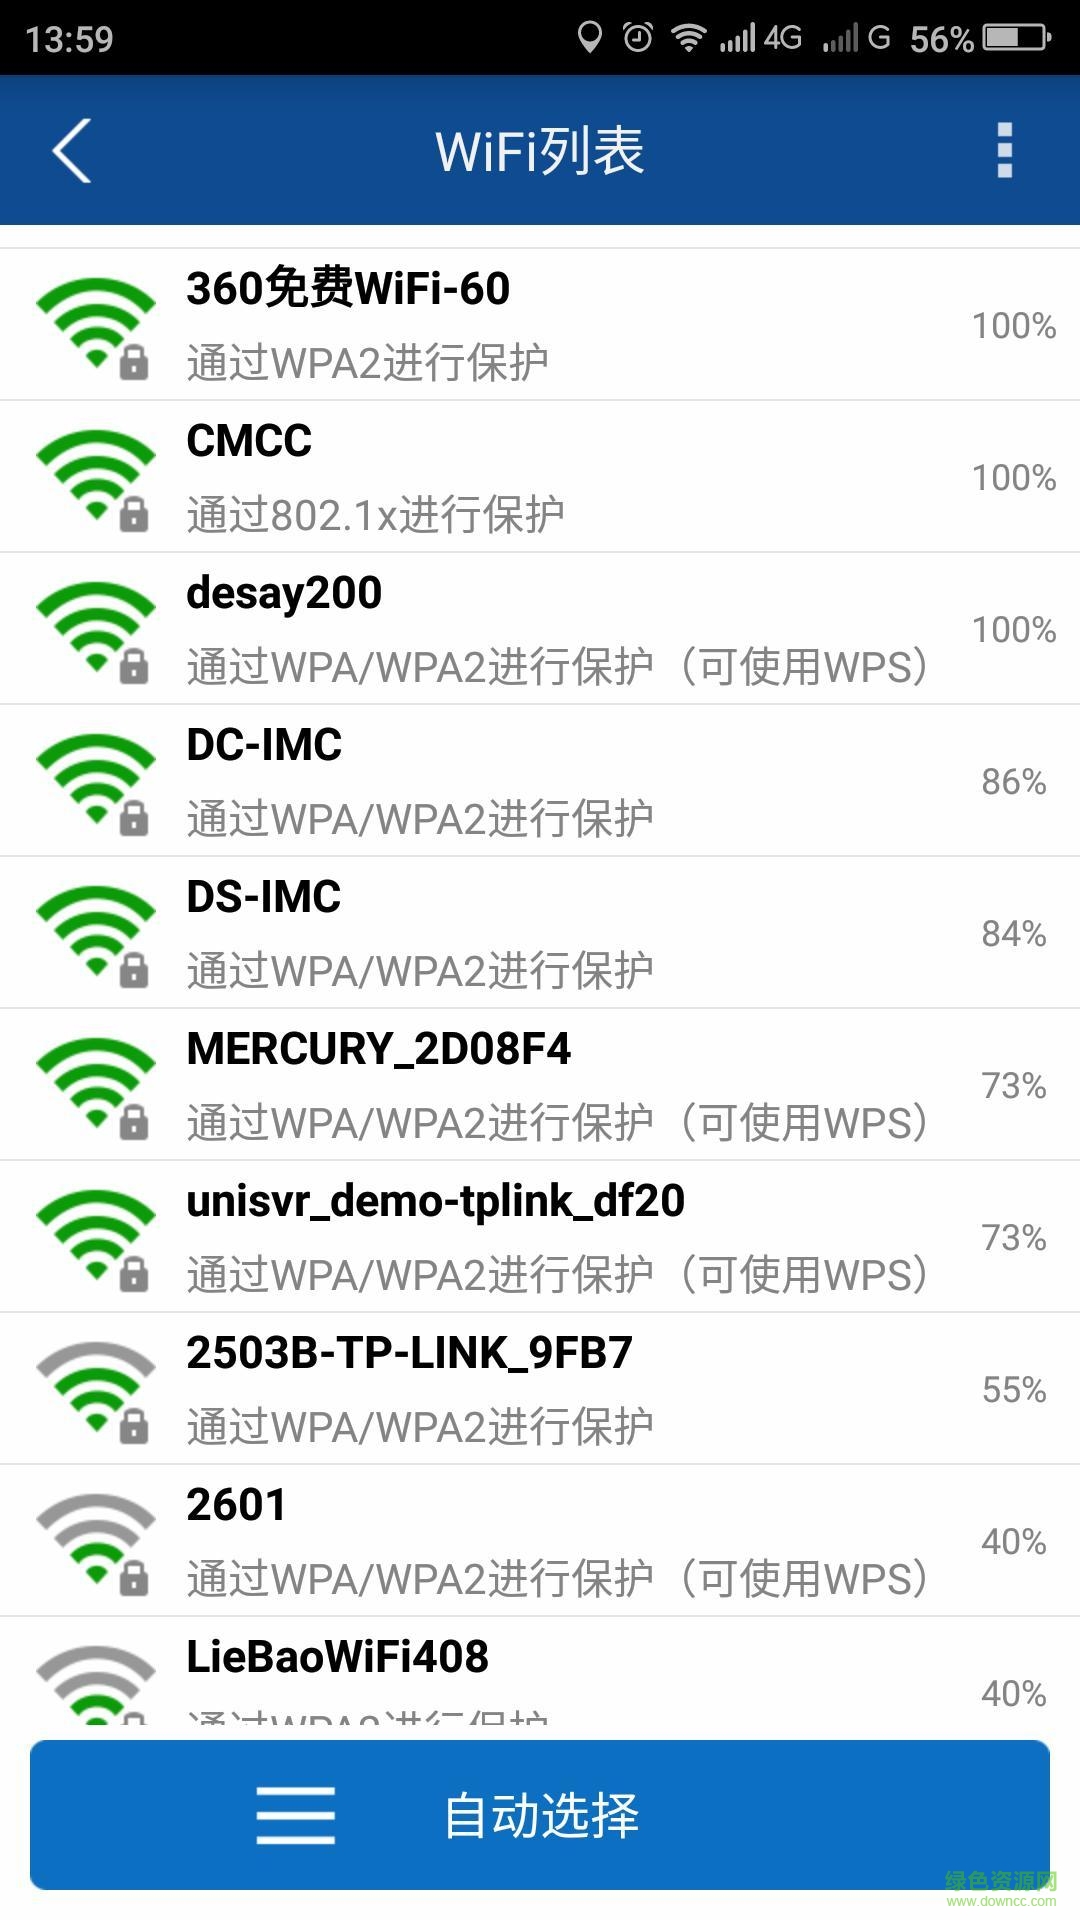 wifi万能热点钥匙app v17.12.20 安卓版0